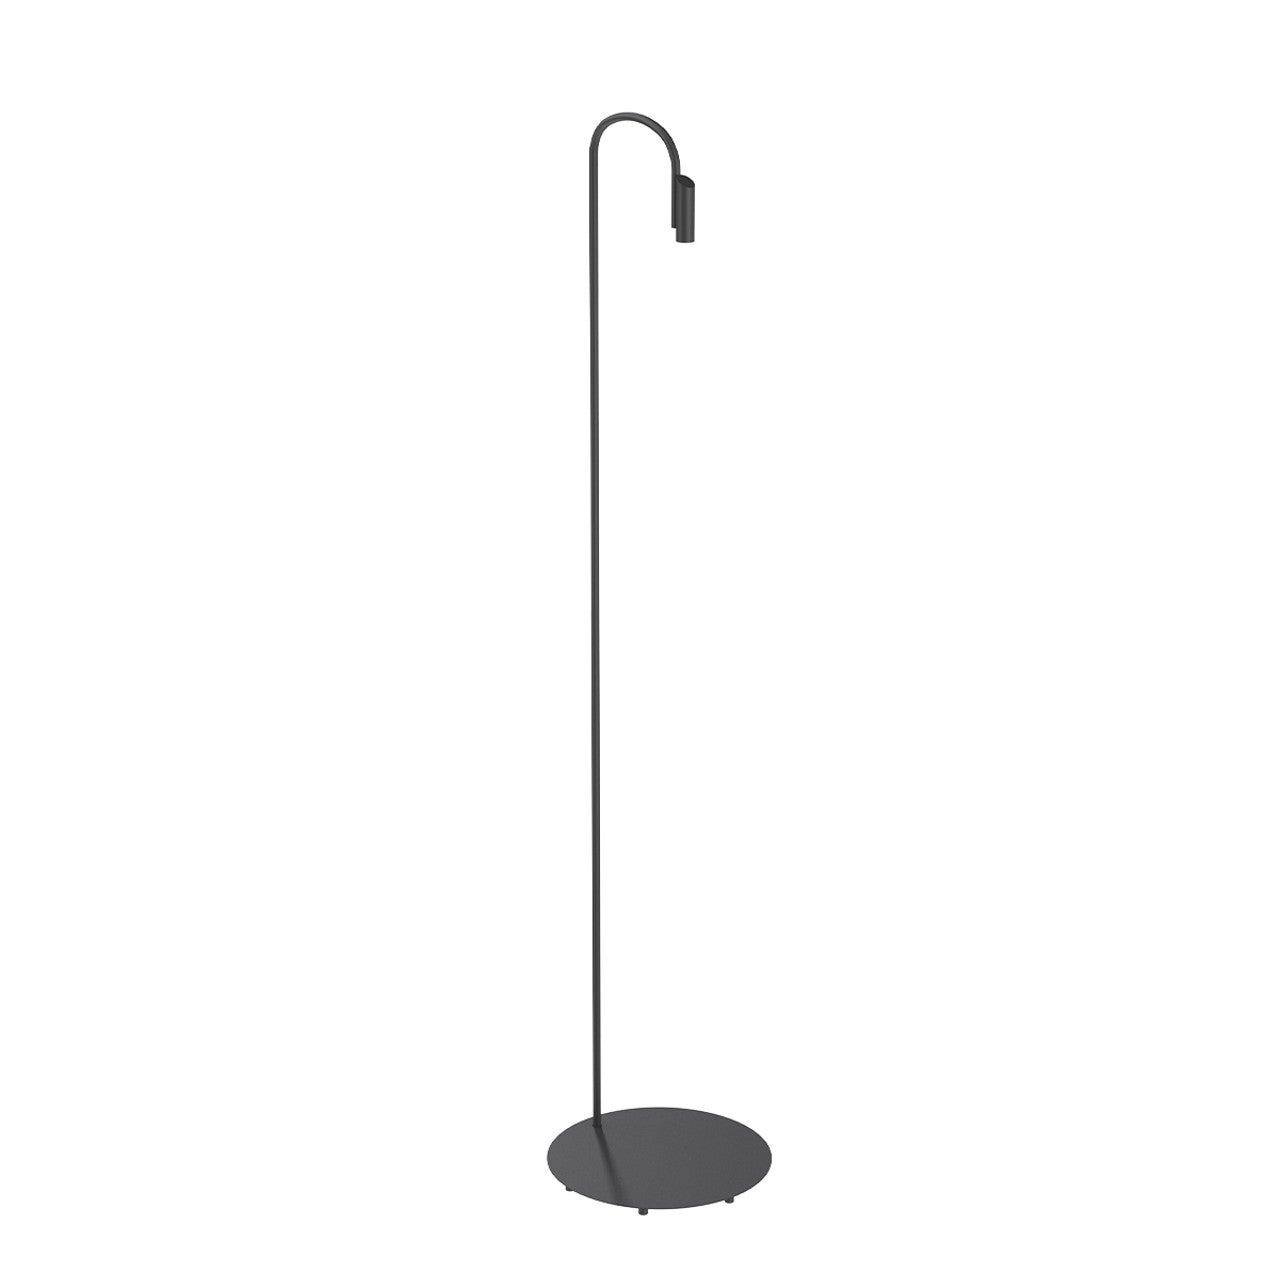 Flos Caule 3000K Model 5 Outdoor Floor Lamp in Black with Regular Shade